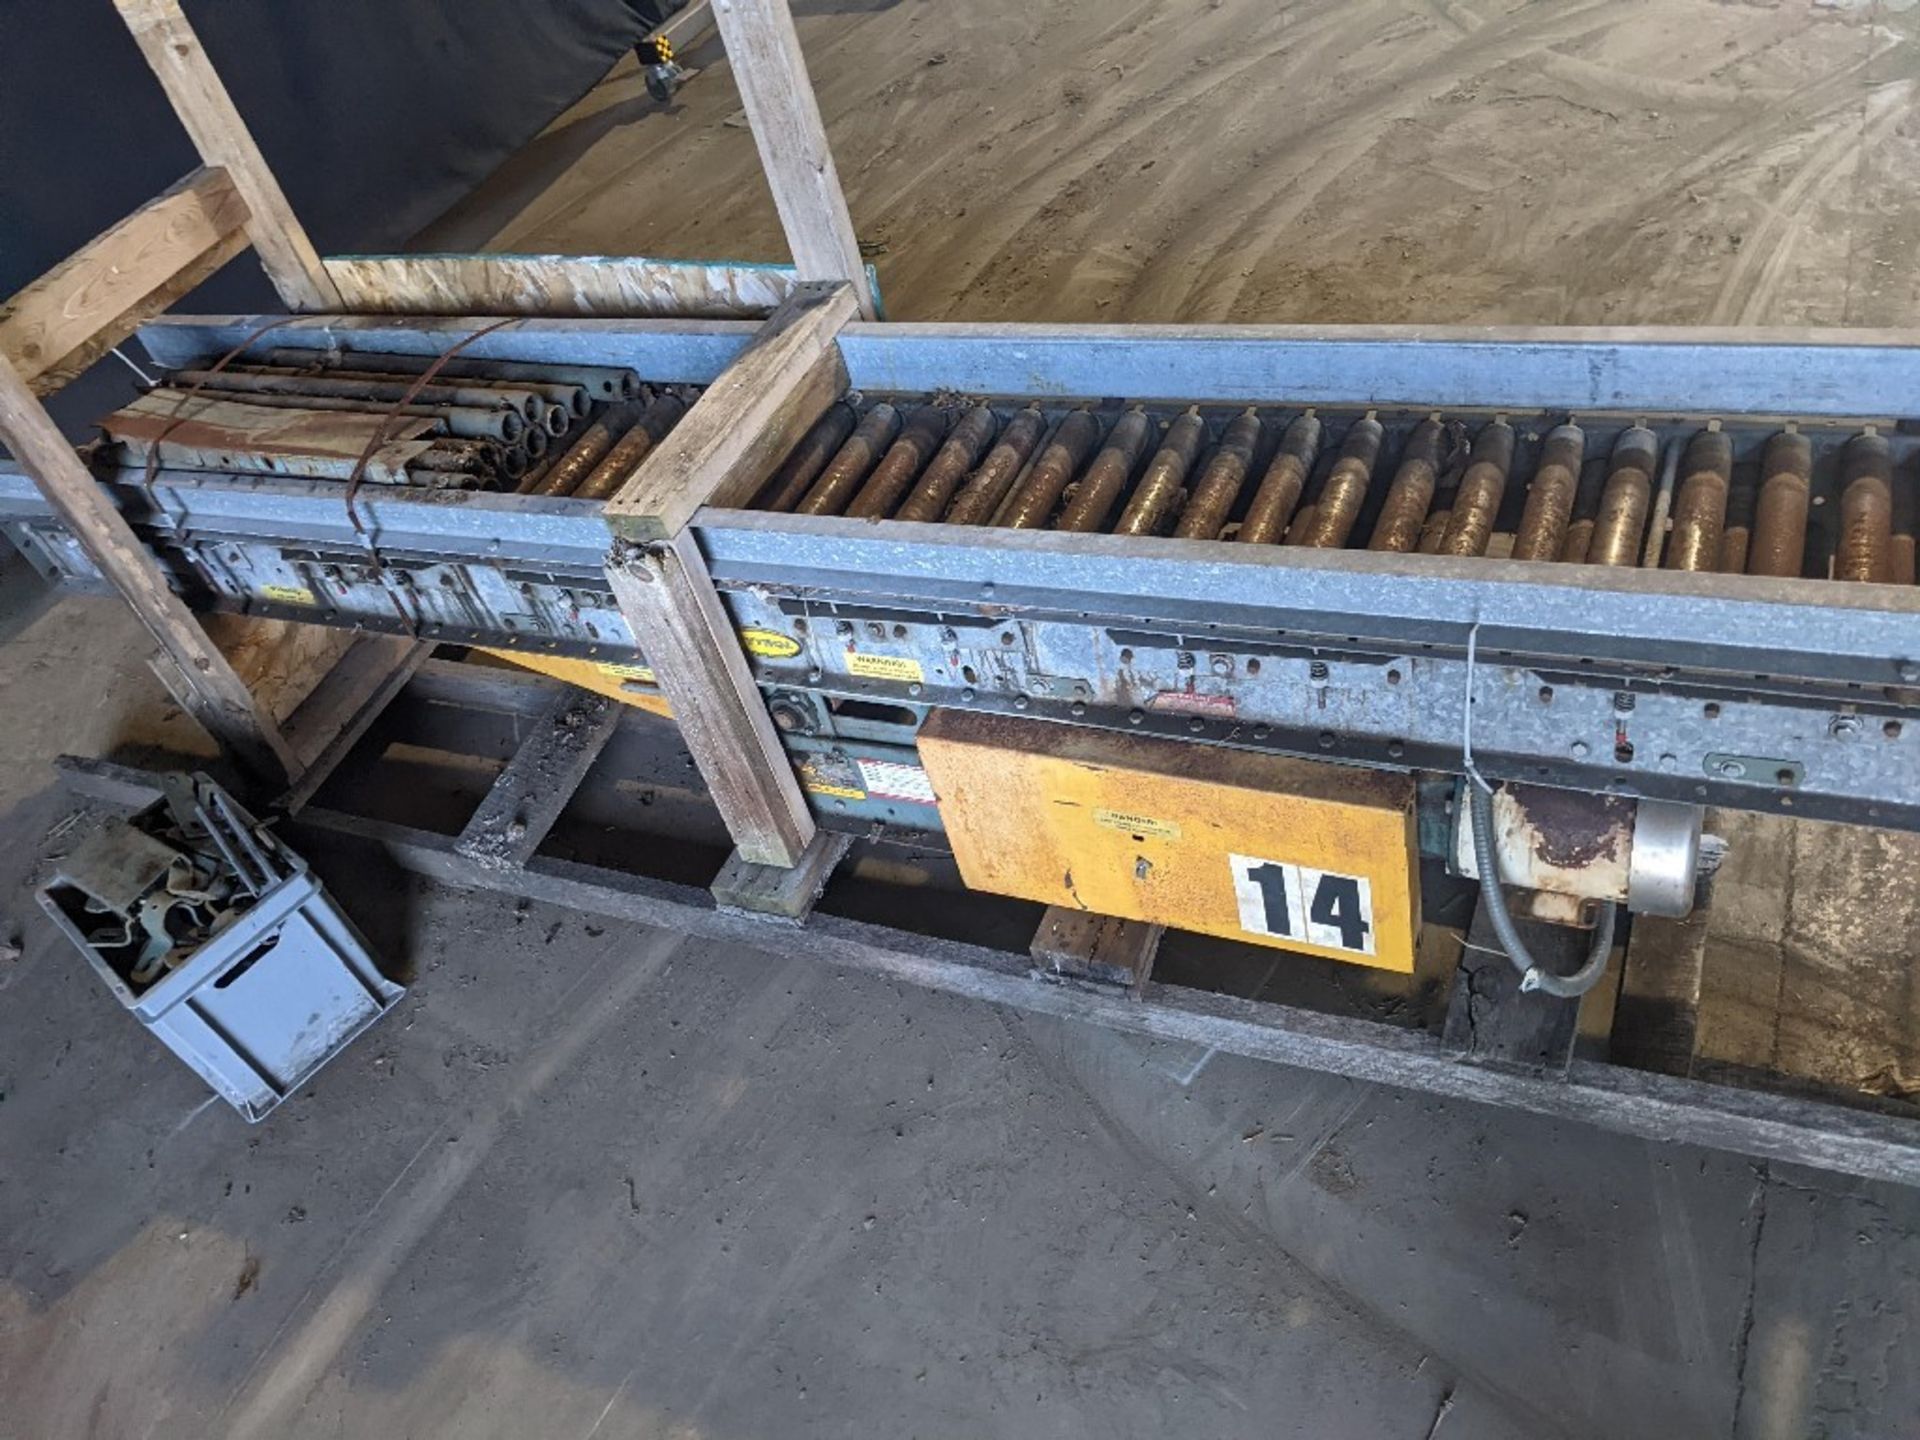 Qty (1) Hytrol Belt Over Roller Case Conveyor - Solo Drive Section - 120"L x 15"W, Model 190-ACZ, - Image 3 of 4